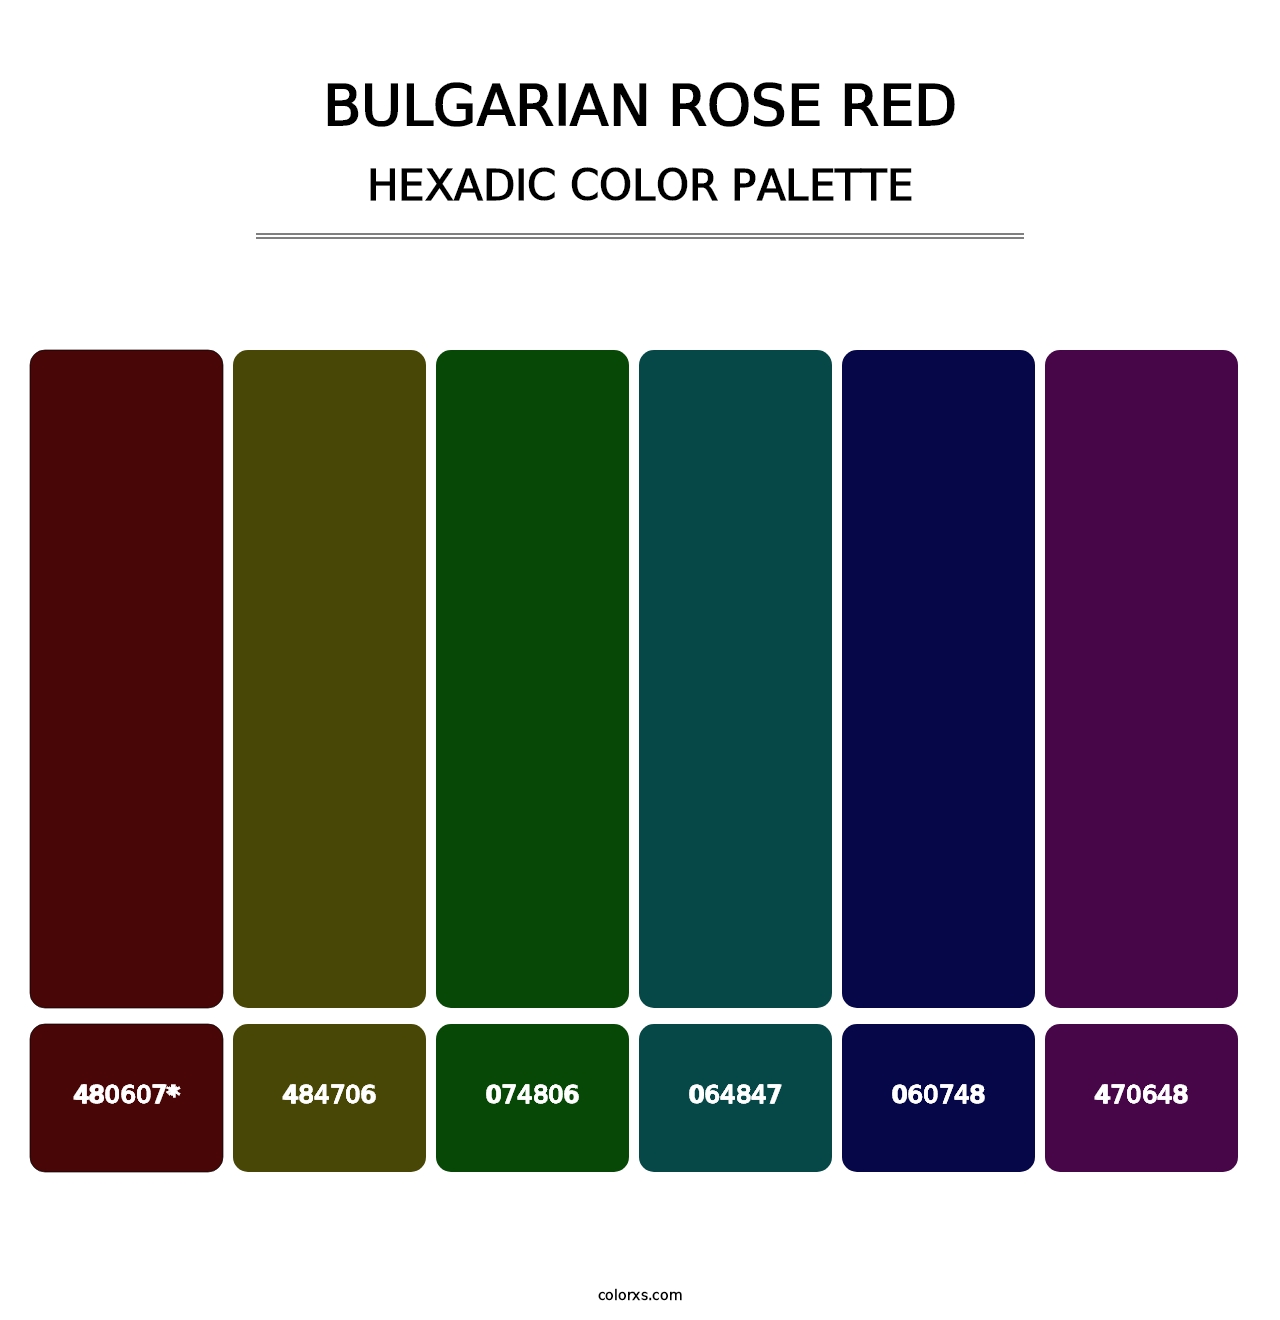 Bulgarian Rose Red - Hexadic Color Palette